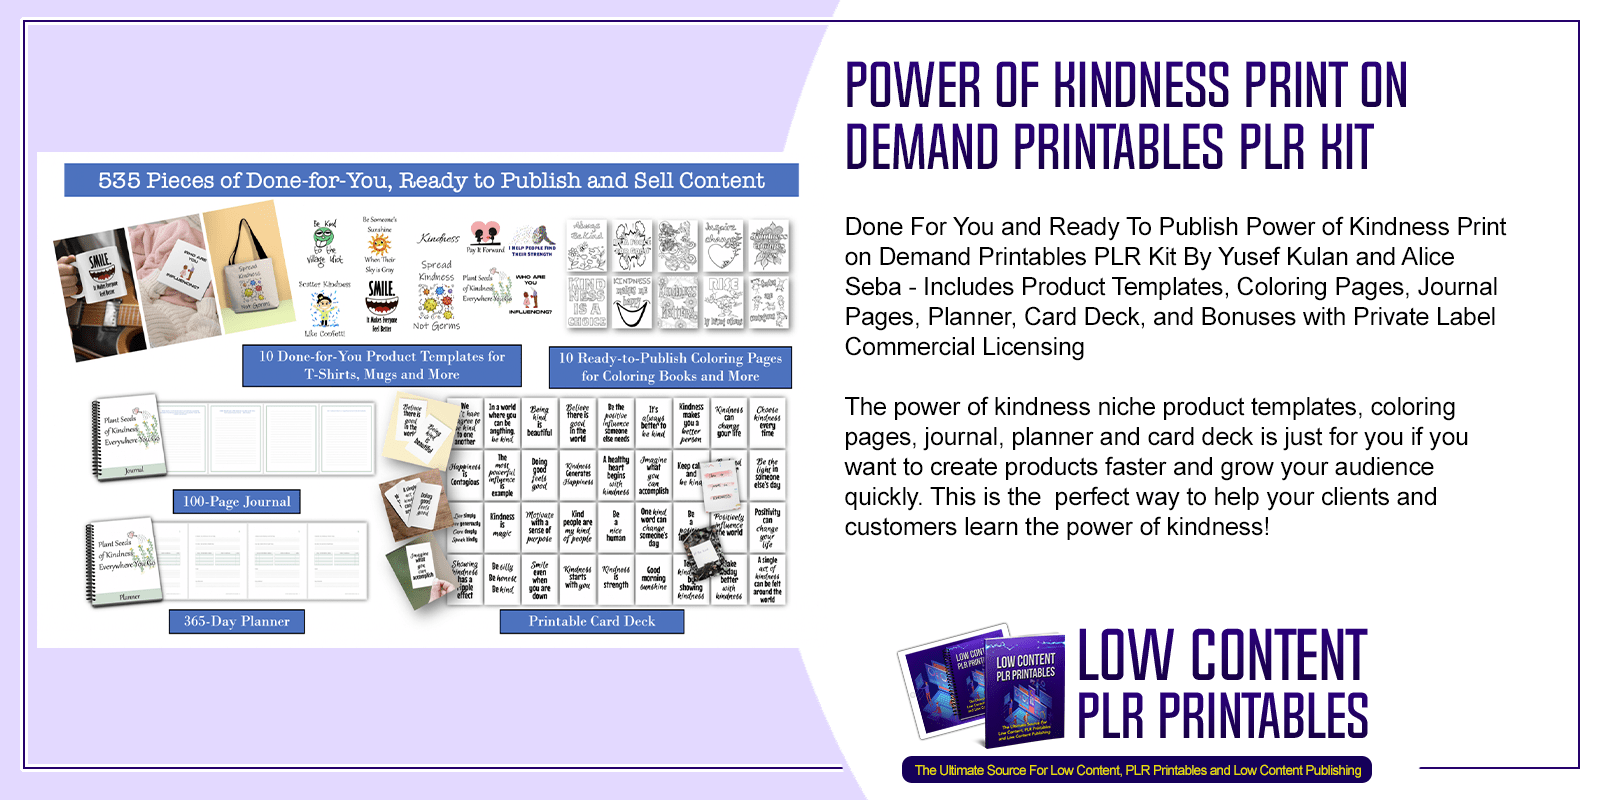 Power of Kindness Print on Demand Printables PLR Kit